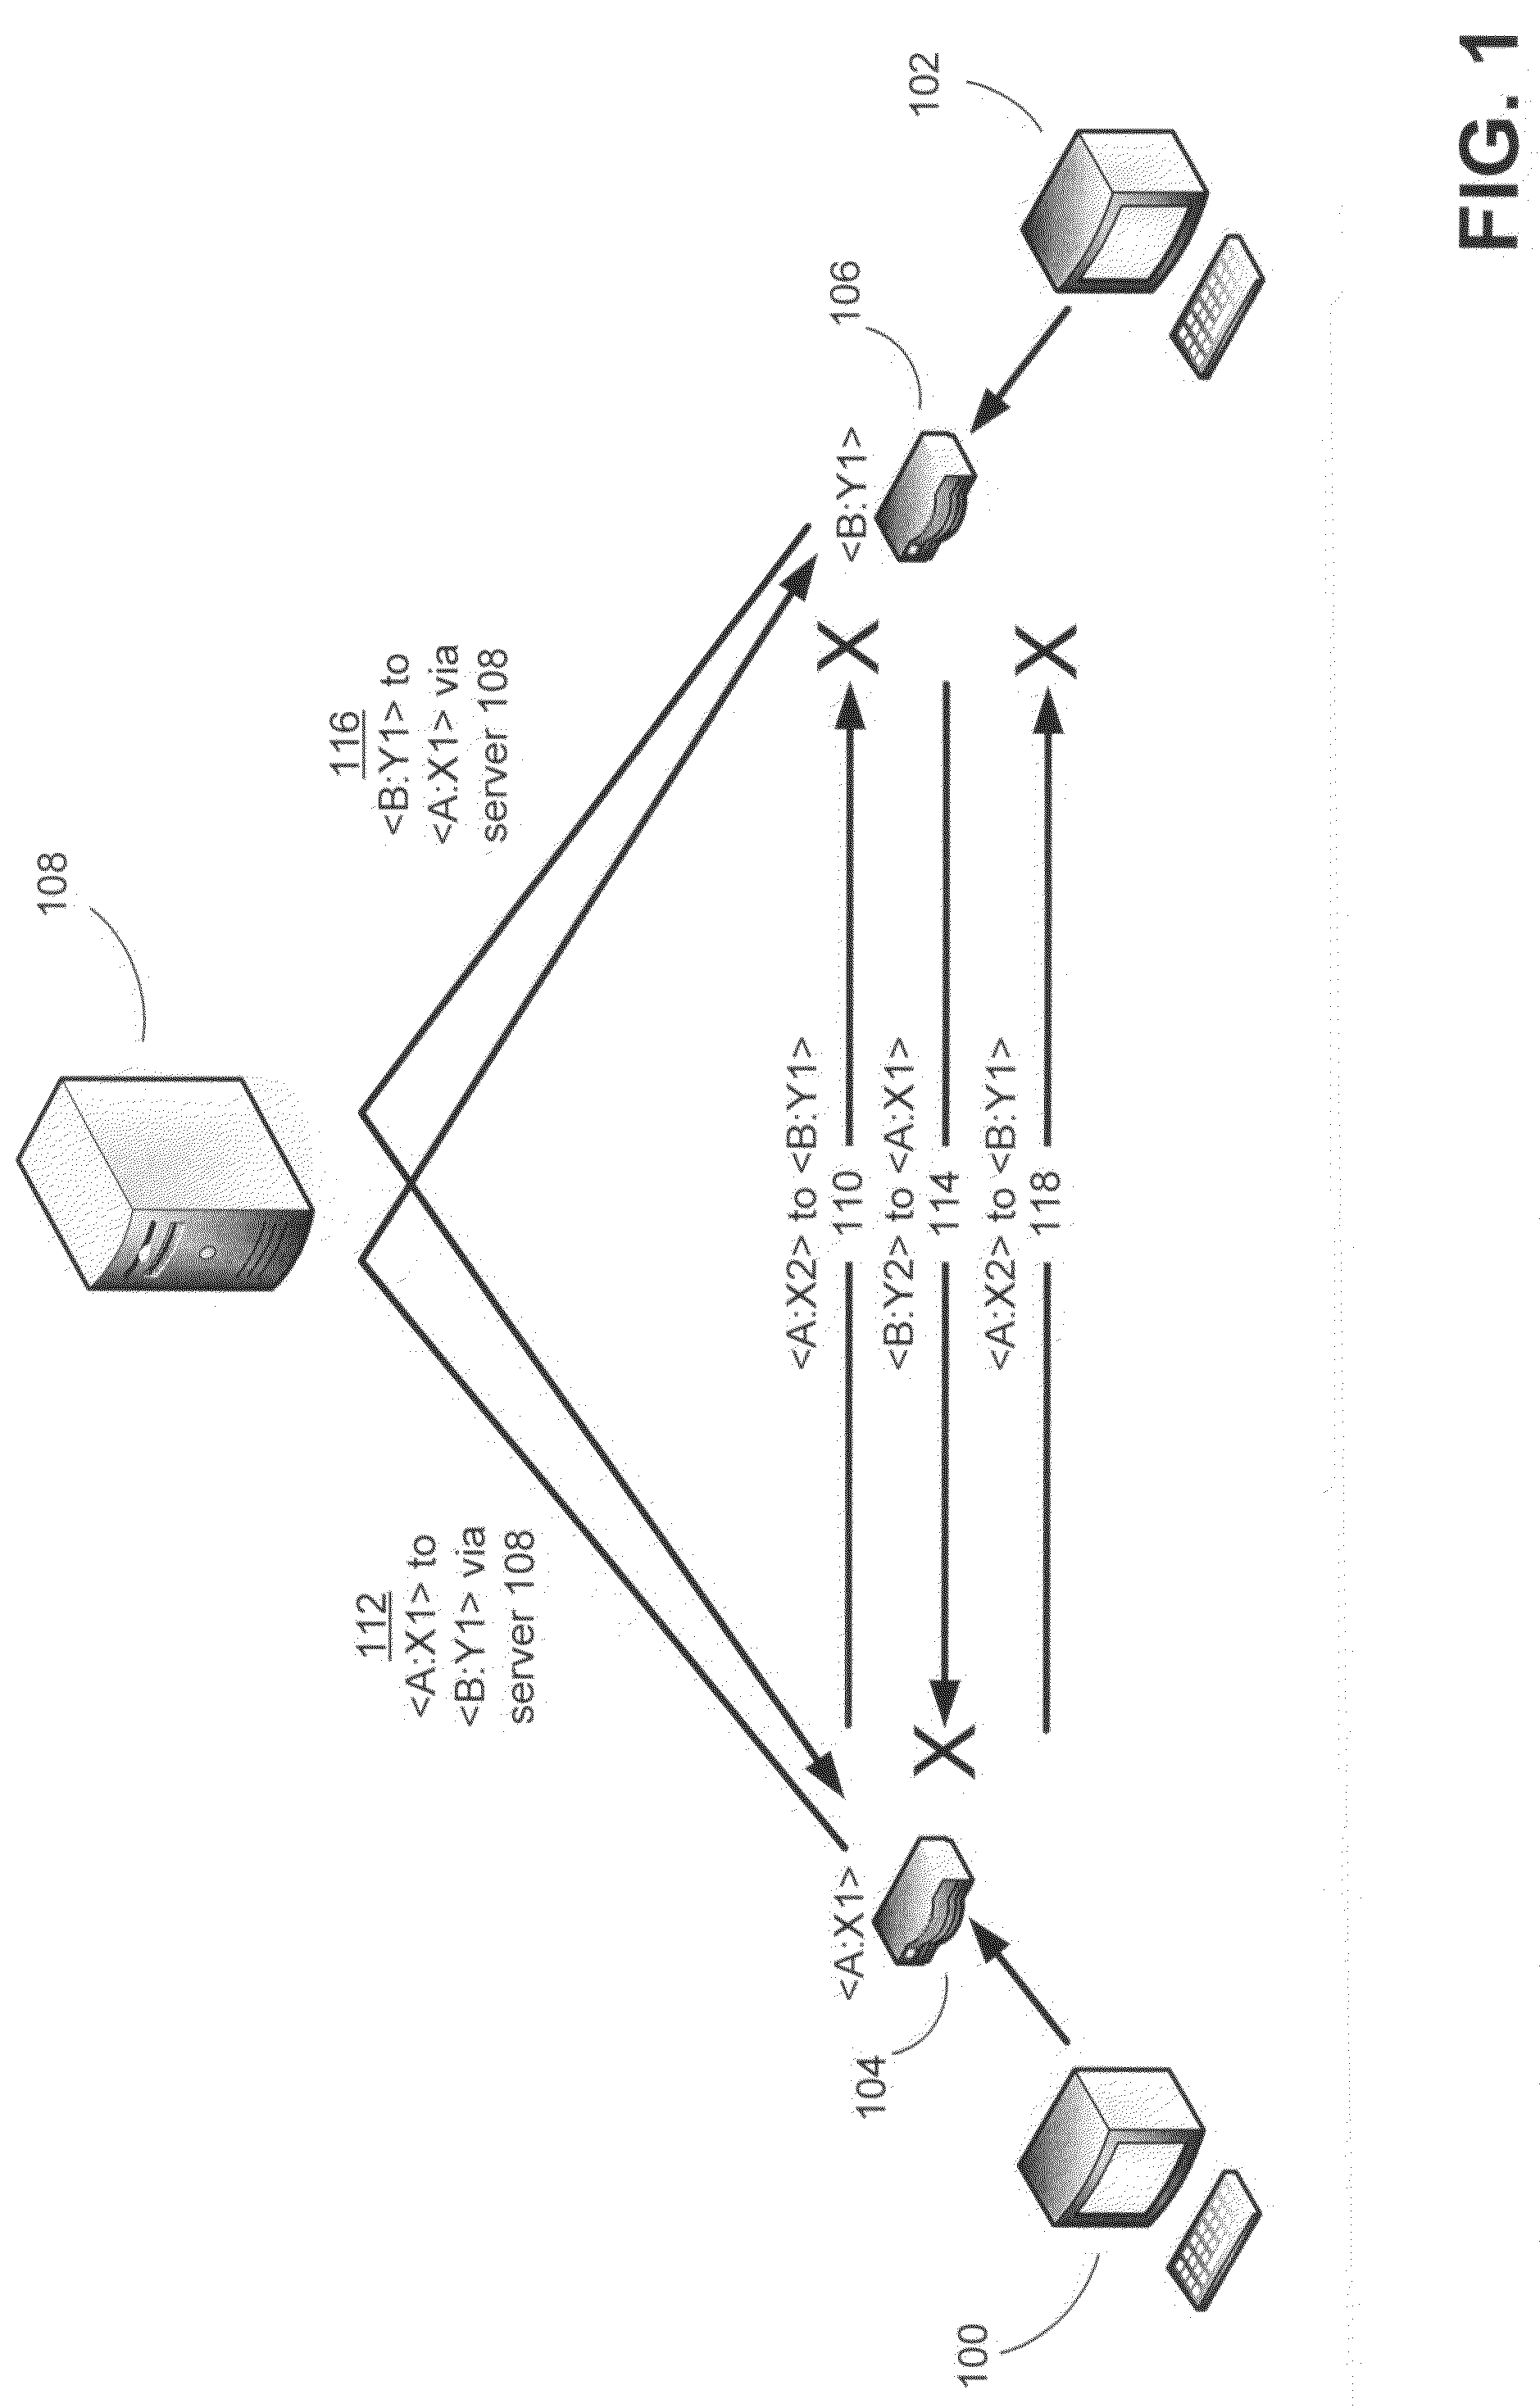 Communicating using the port-preserving nature of symmetric network address translators